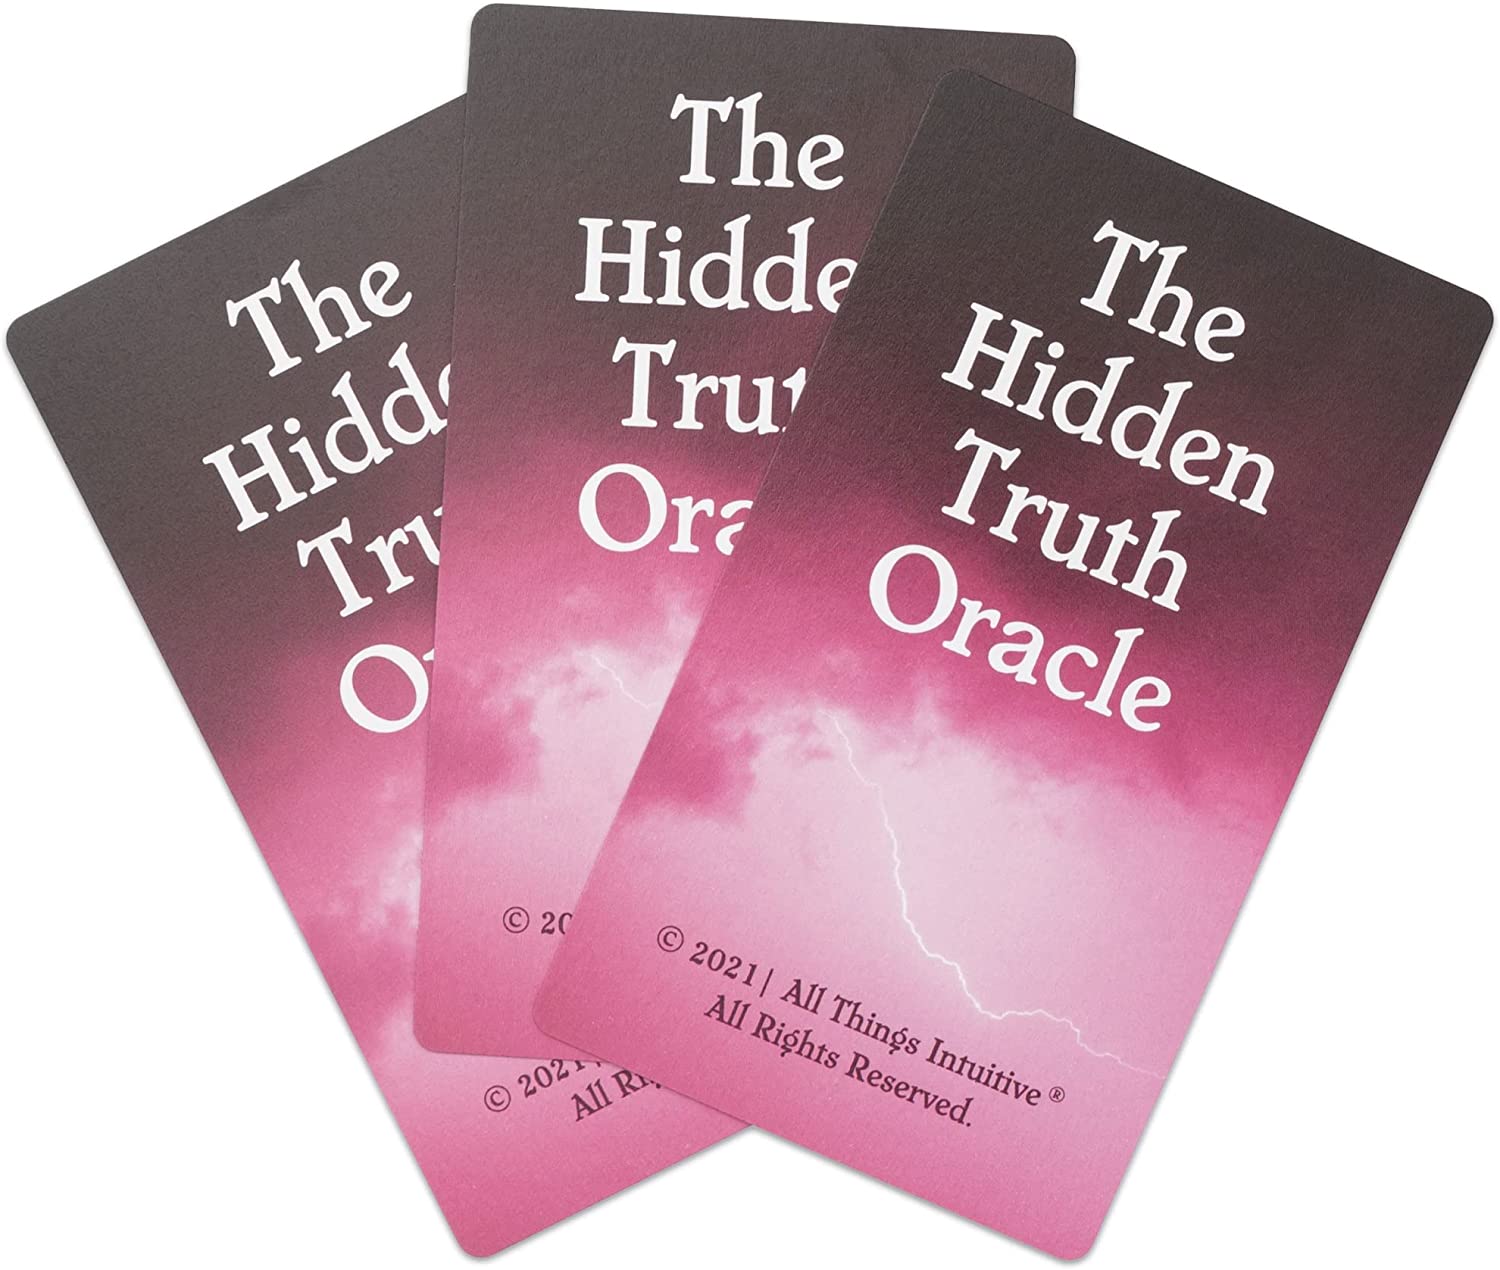 The Hidden Truth Oracle Cards